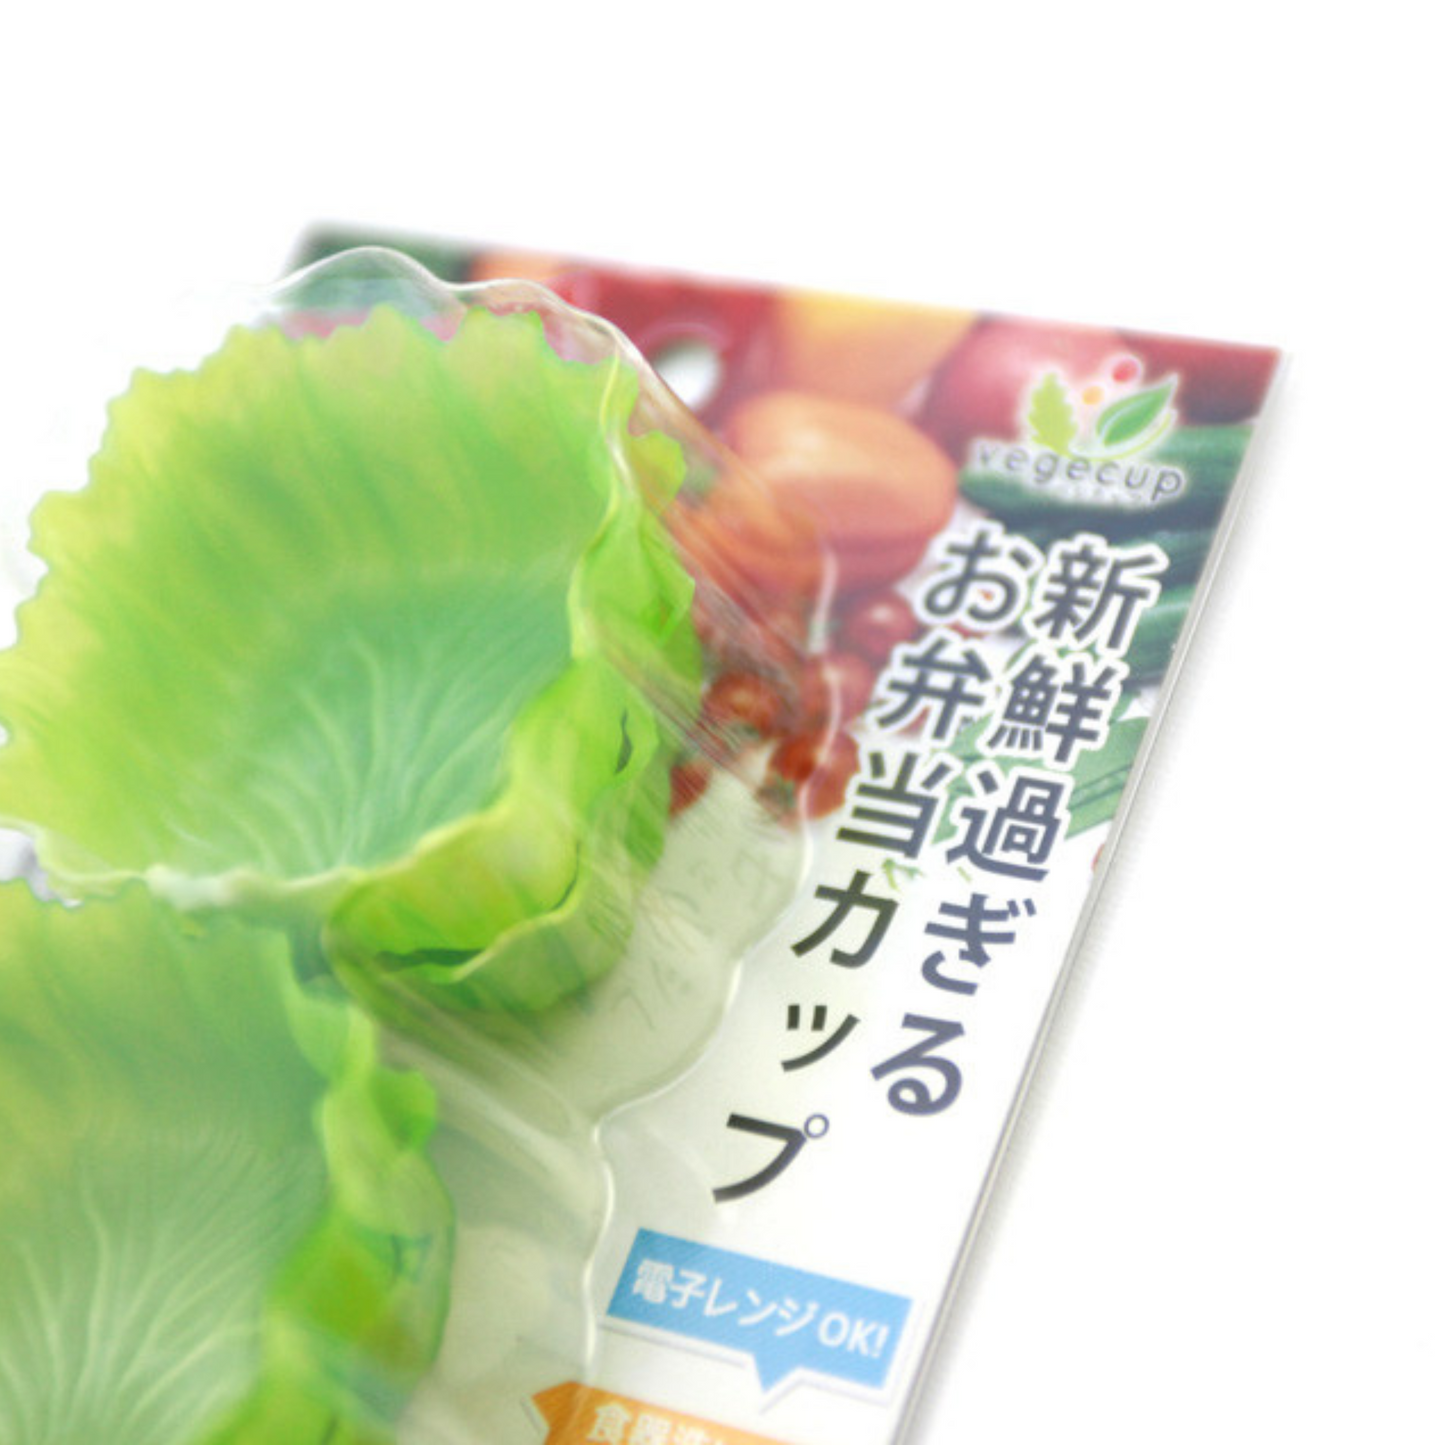 Green Veggie Cups | Square - Bento&co